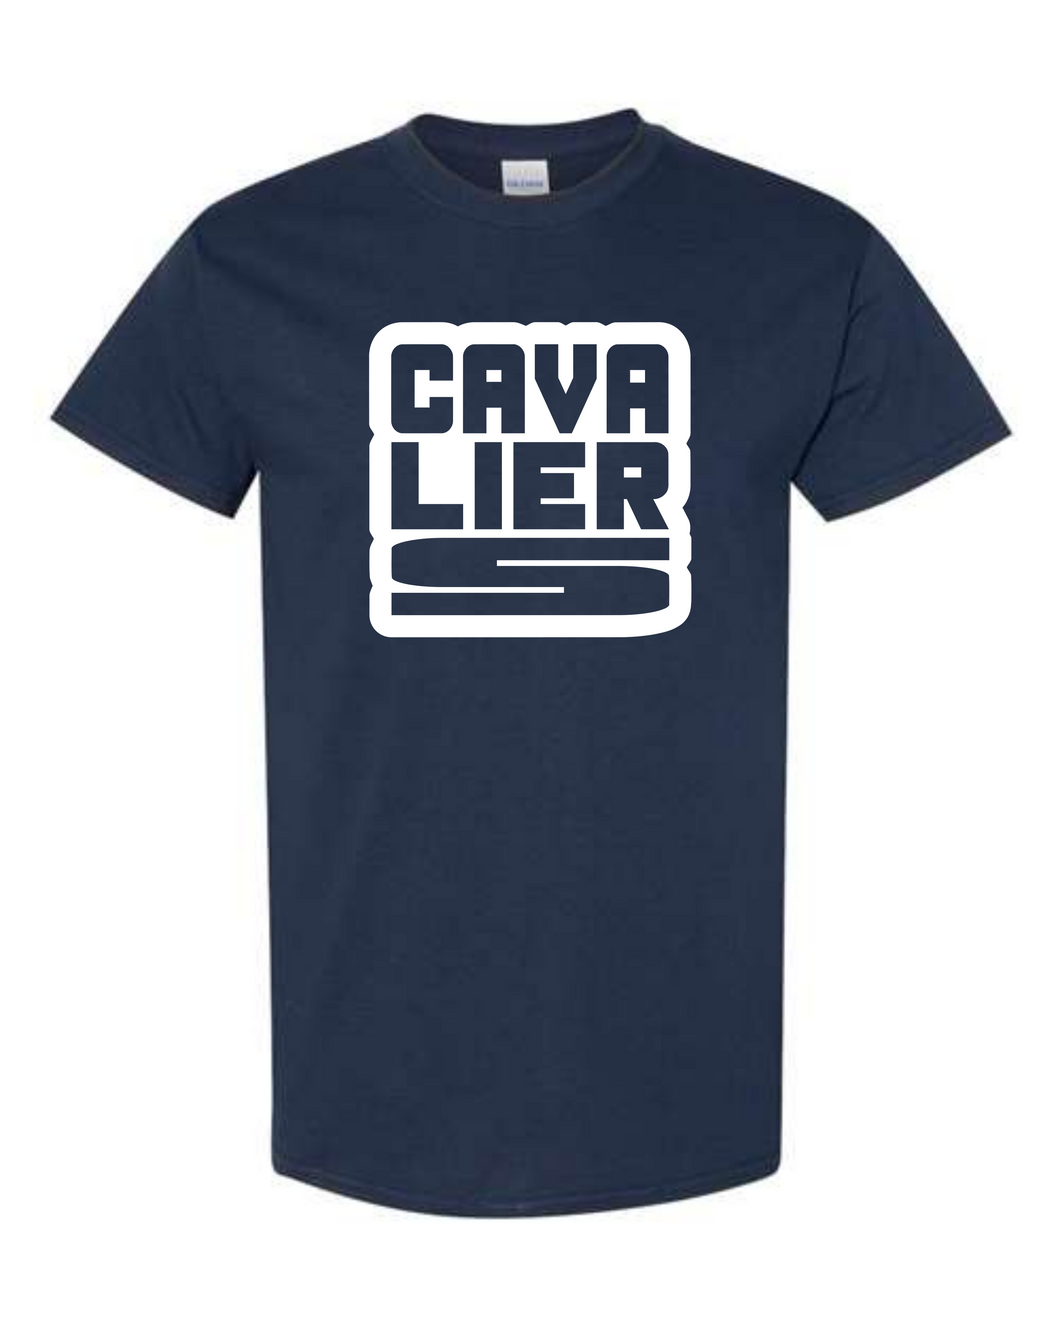 CAVALIERS Square Design Tshirt